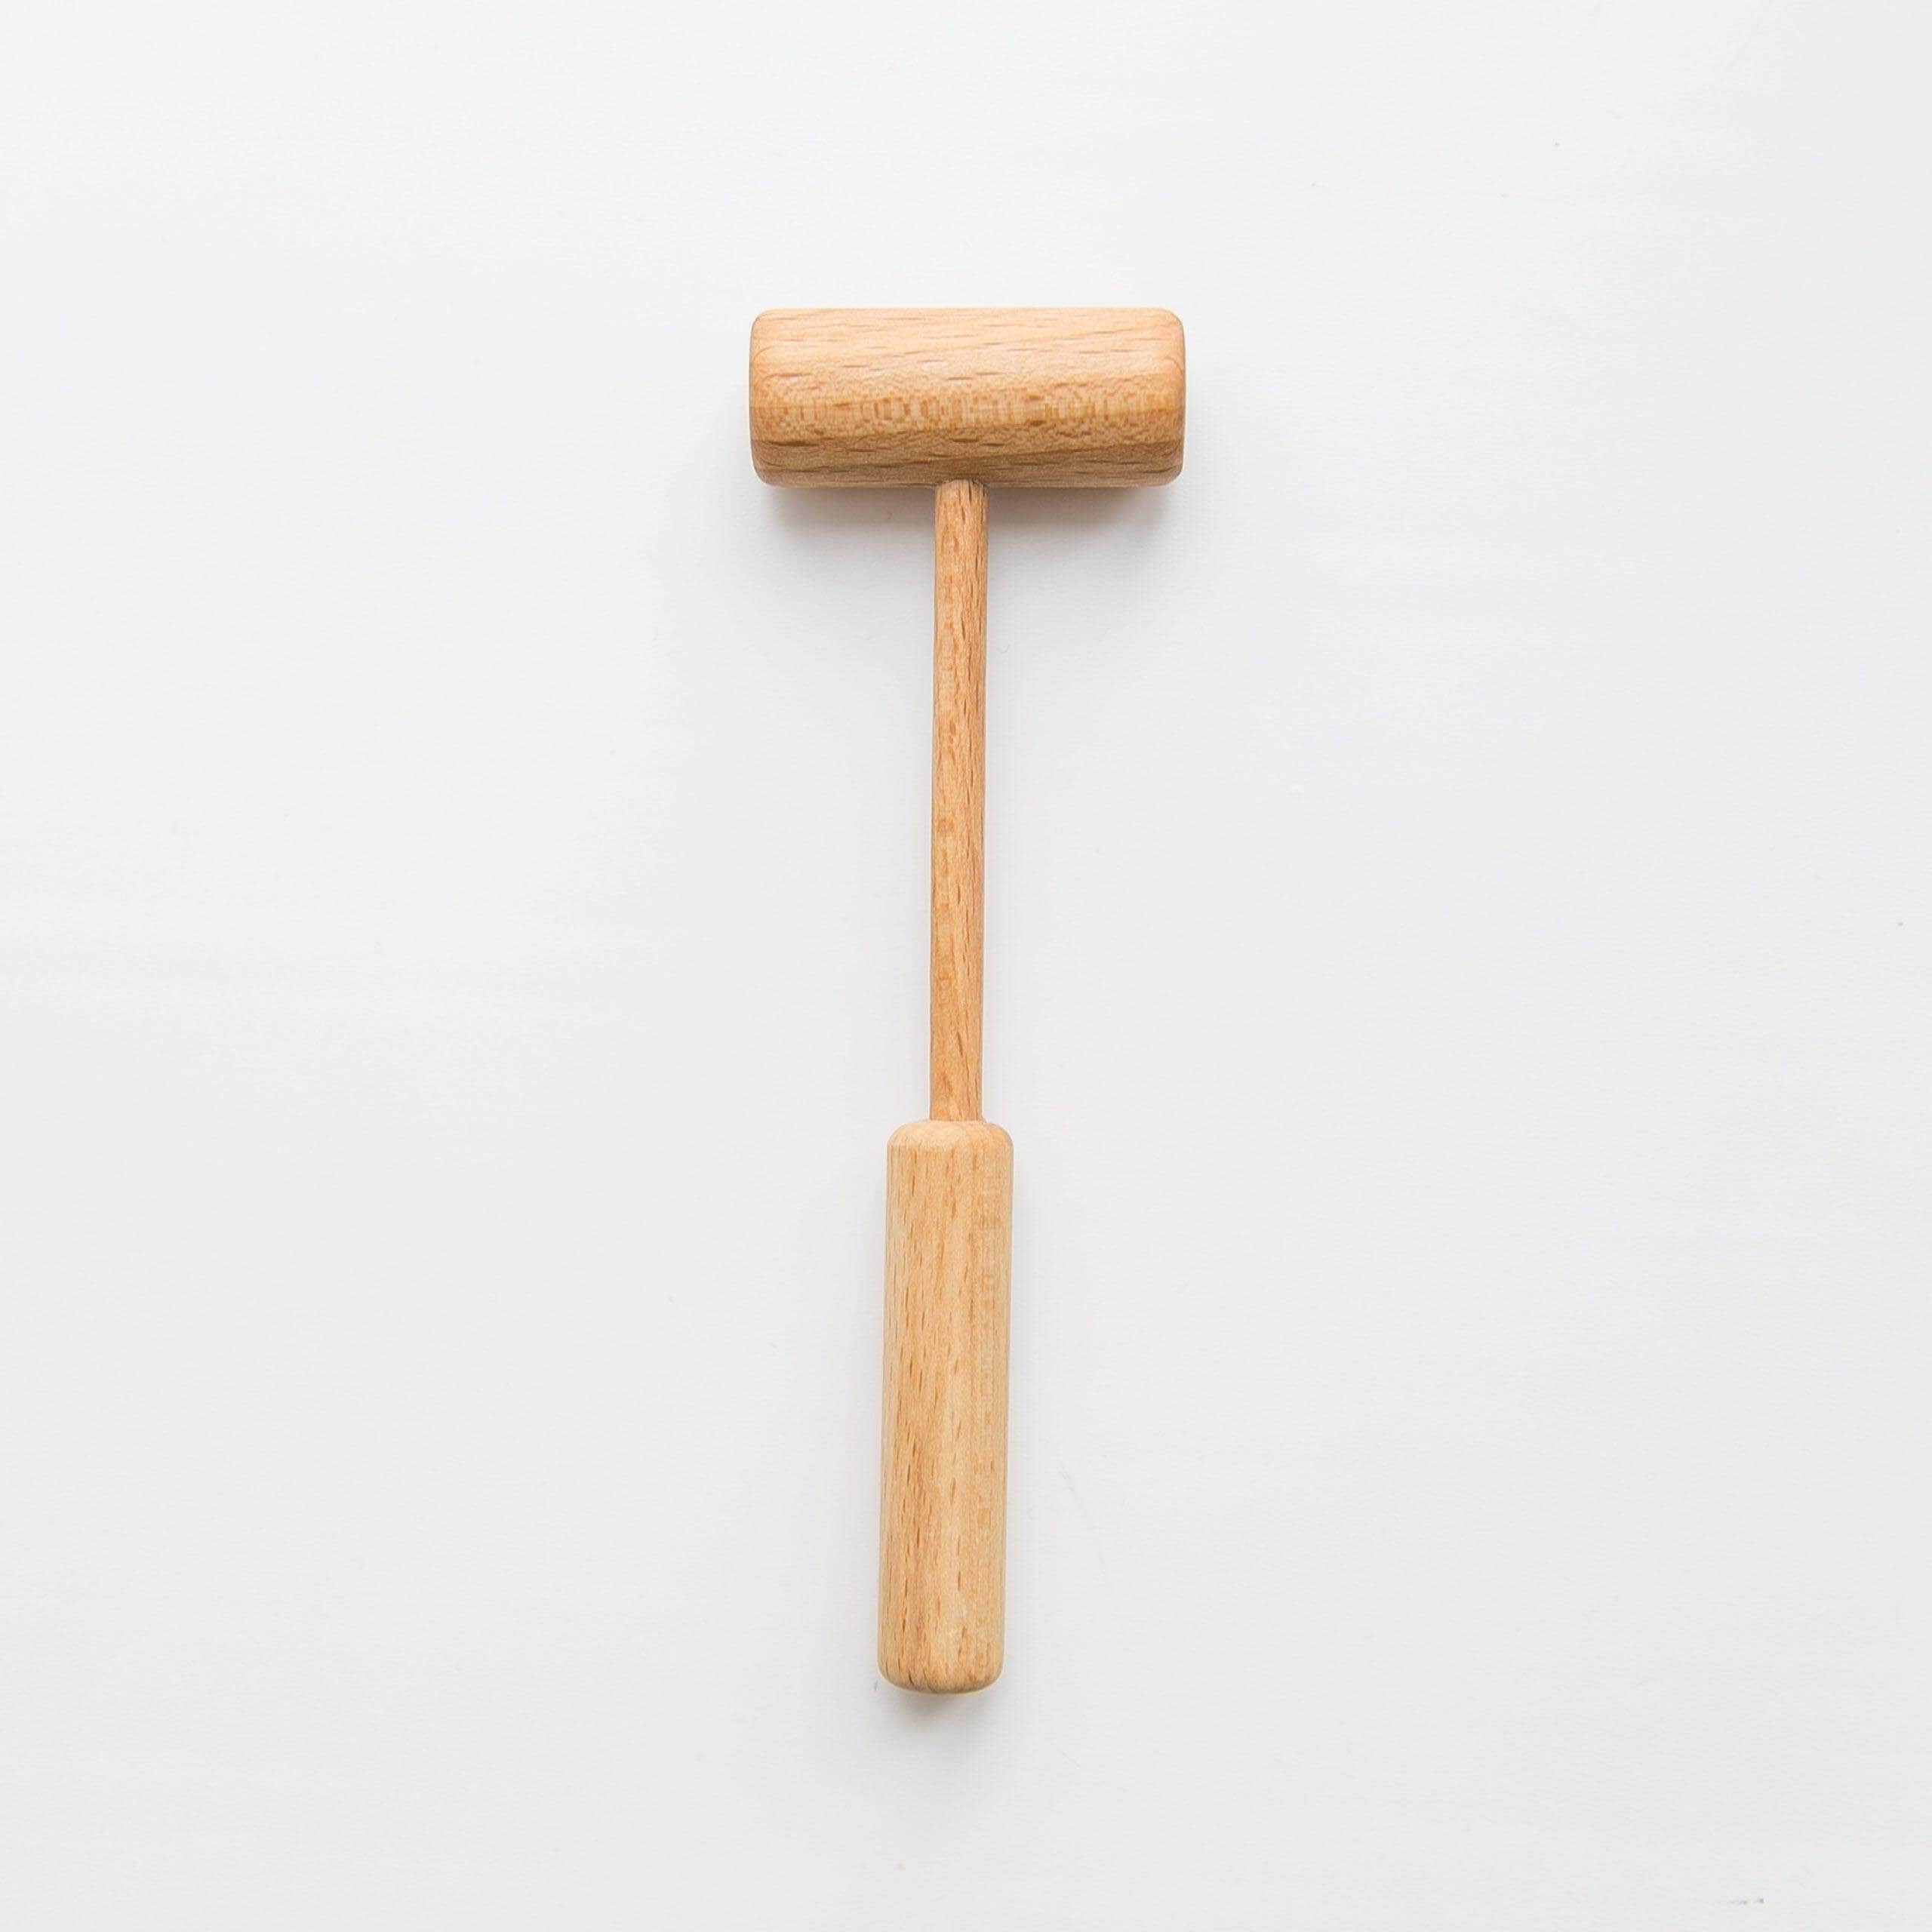 Arztset - wooden toy -2